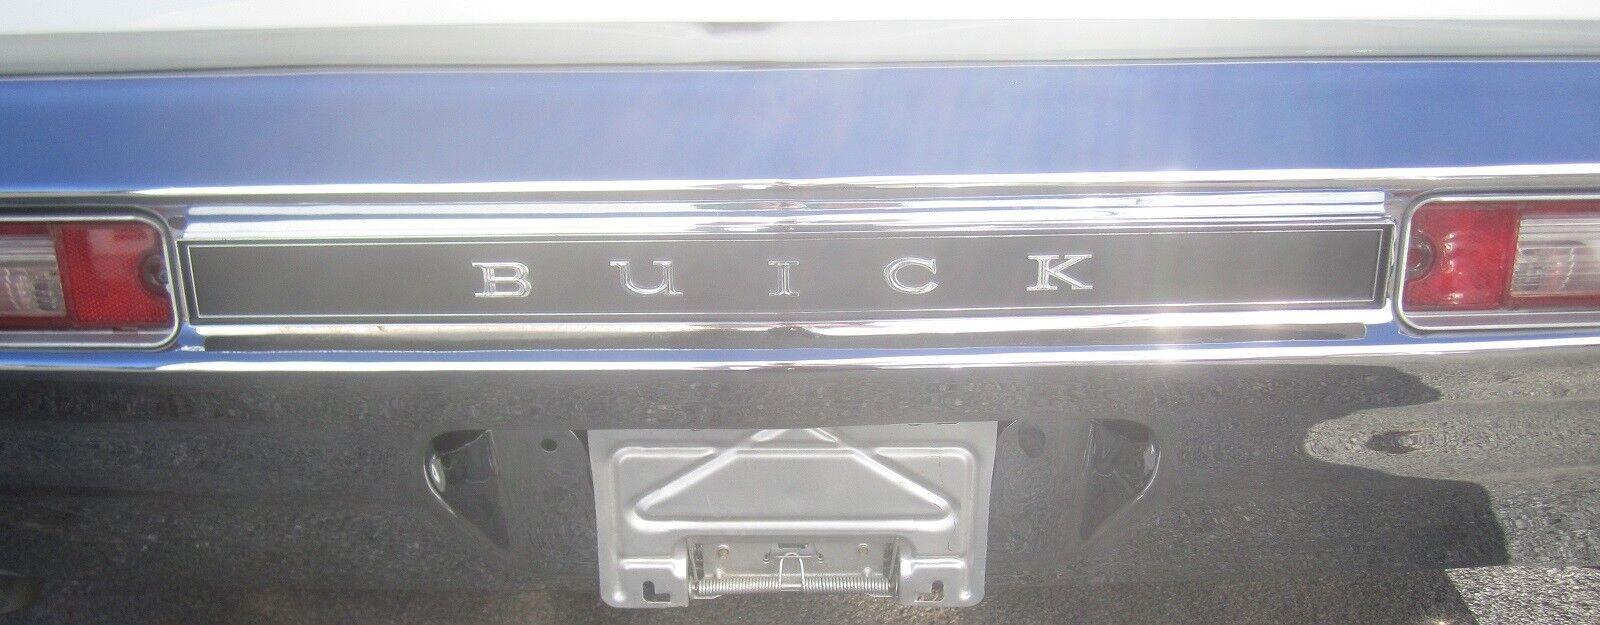 1970 Buick Skylark, GS, GSX Rear Bumper Emblem | Die Cast Chrome